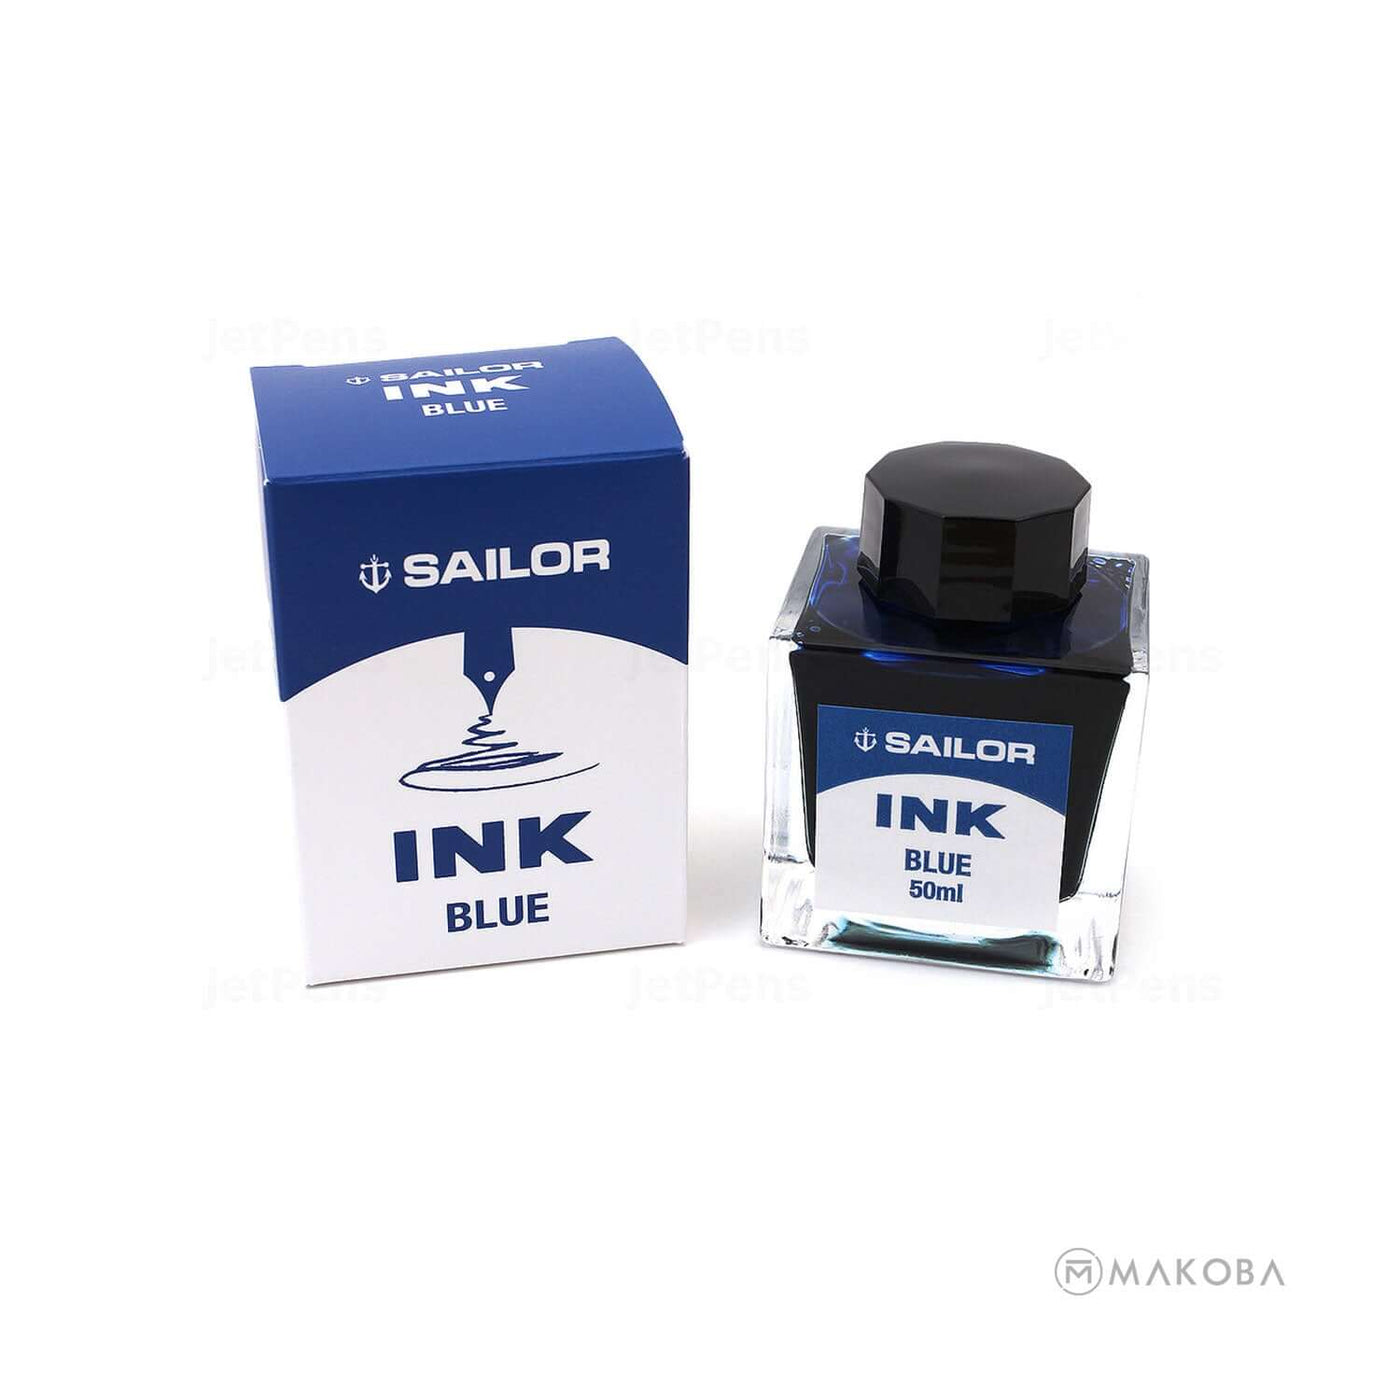 SAILOR DYE BASED BLUE INK BOTTLE 50ML 2